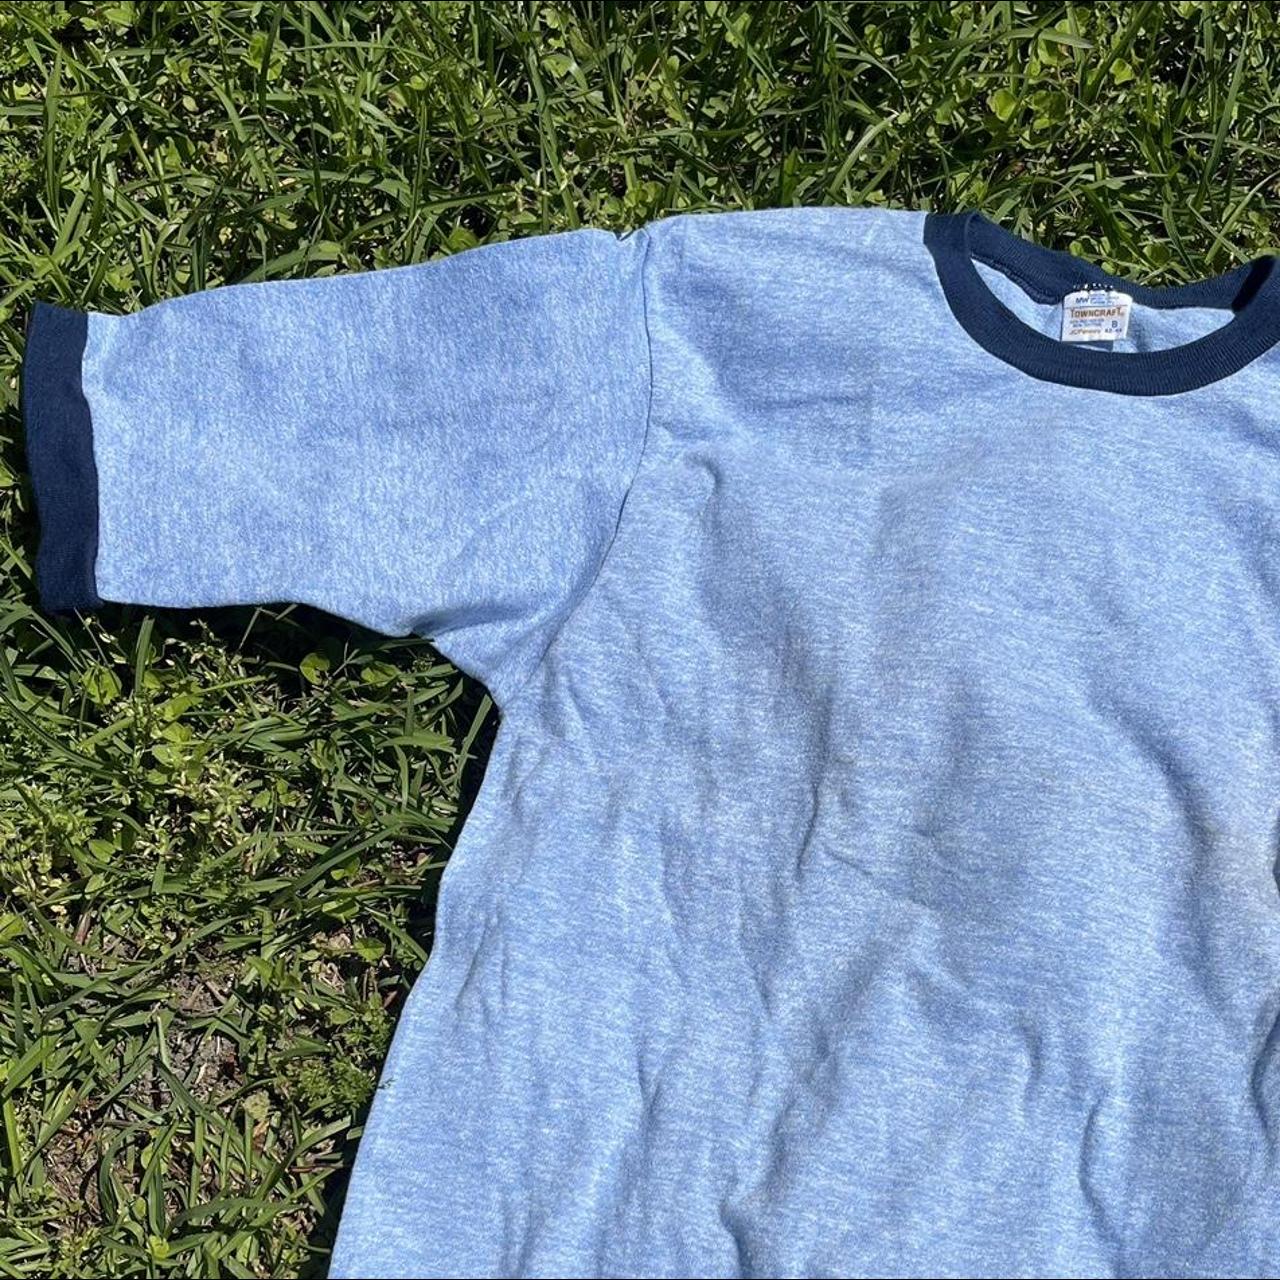 Sears Men's Blue and Navy T-shirt | Depop